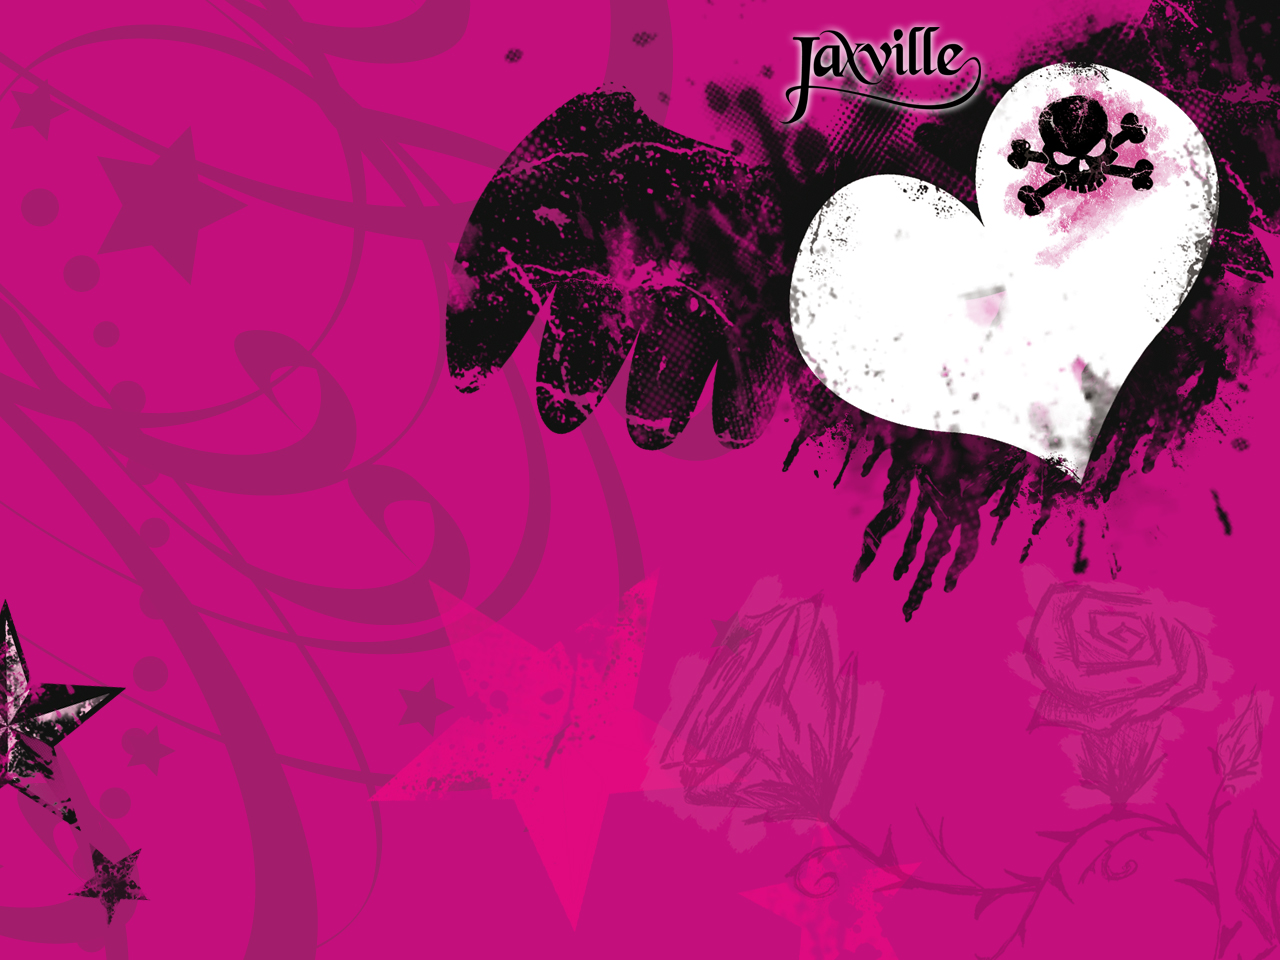 Download your Jaxville wallpaper here